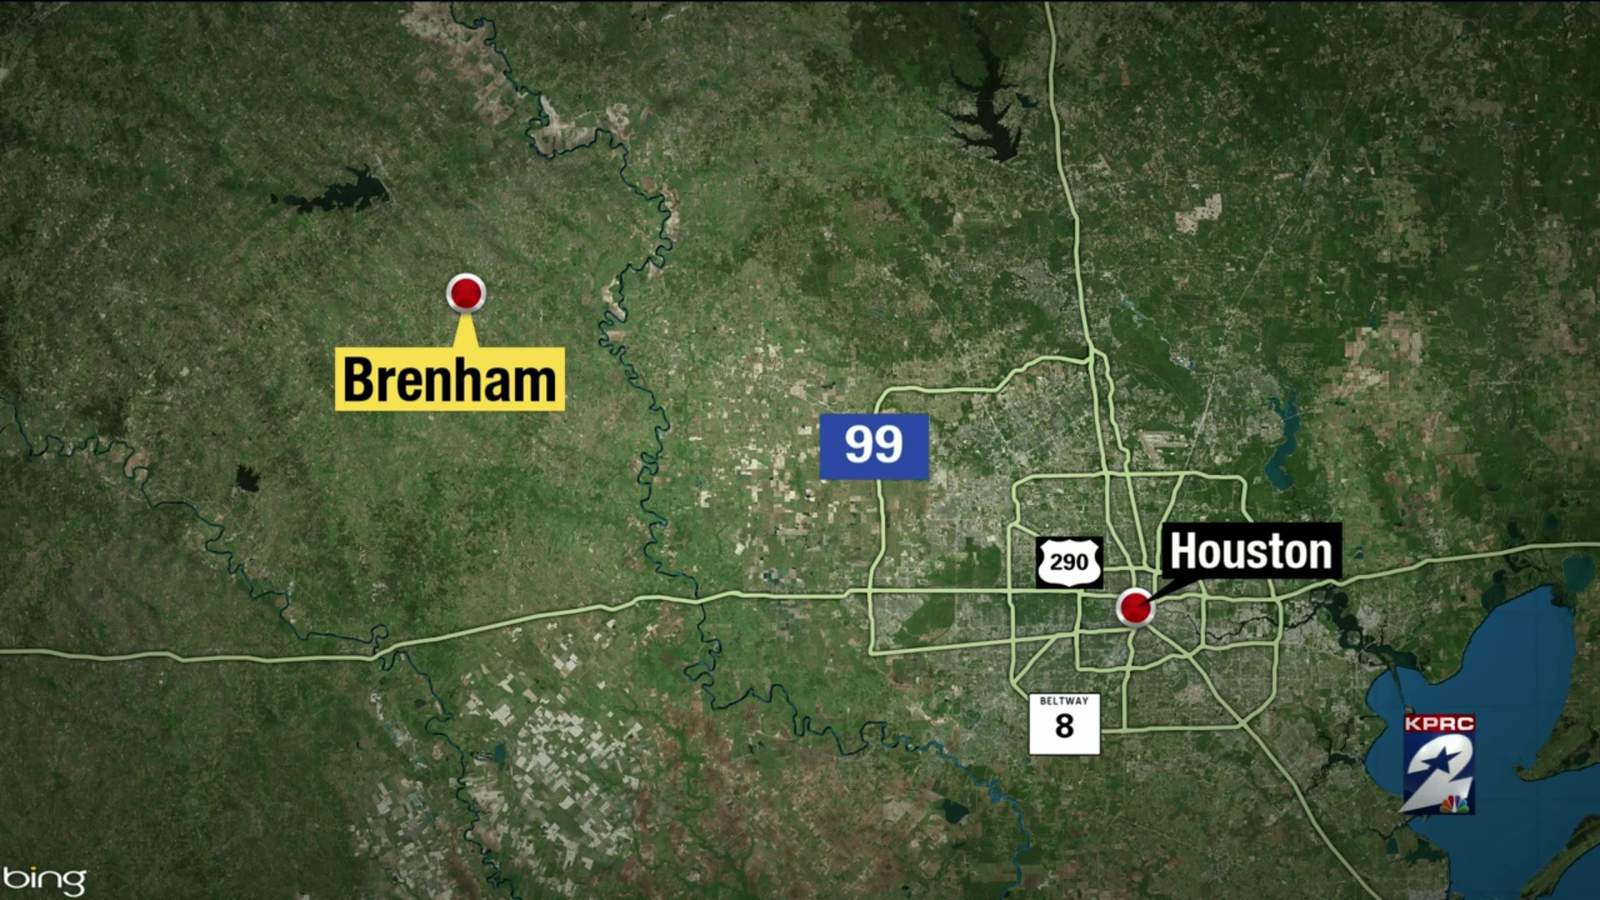 19 deaths, 100+ cases at Brenham nursing home, health officials say